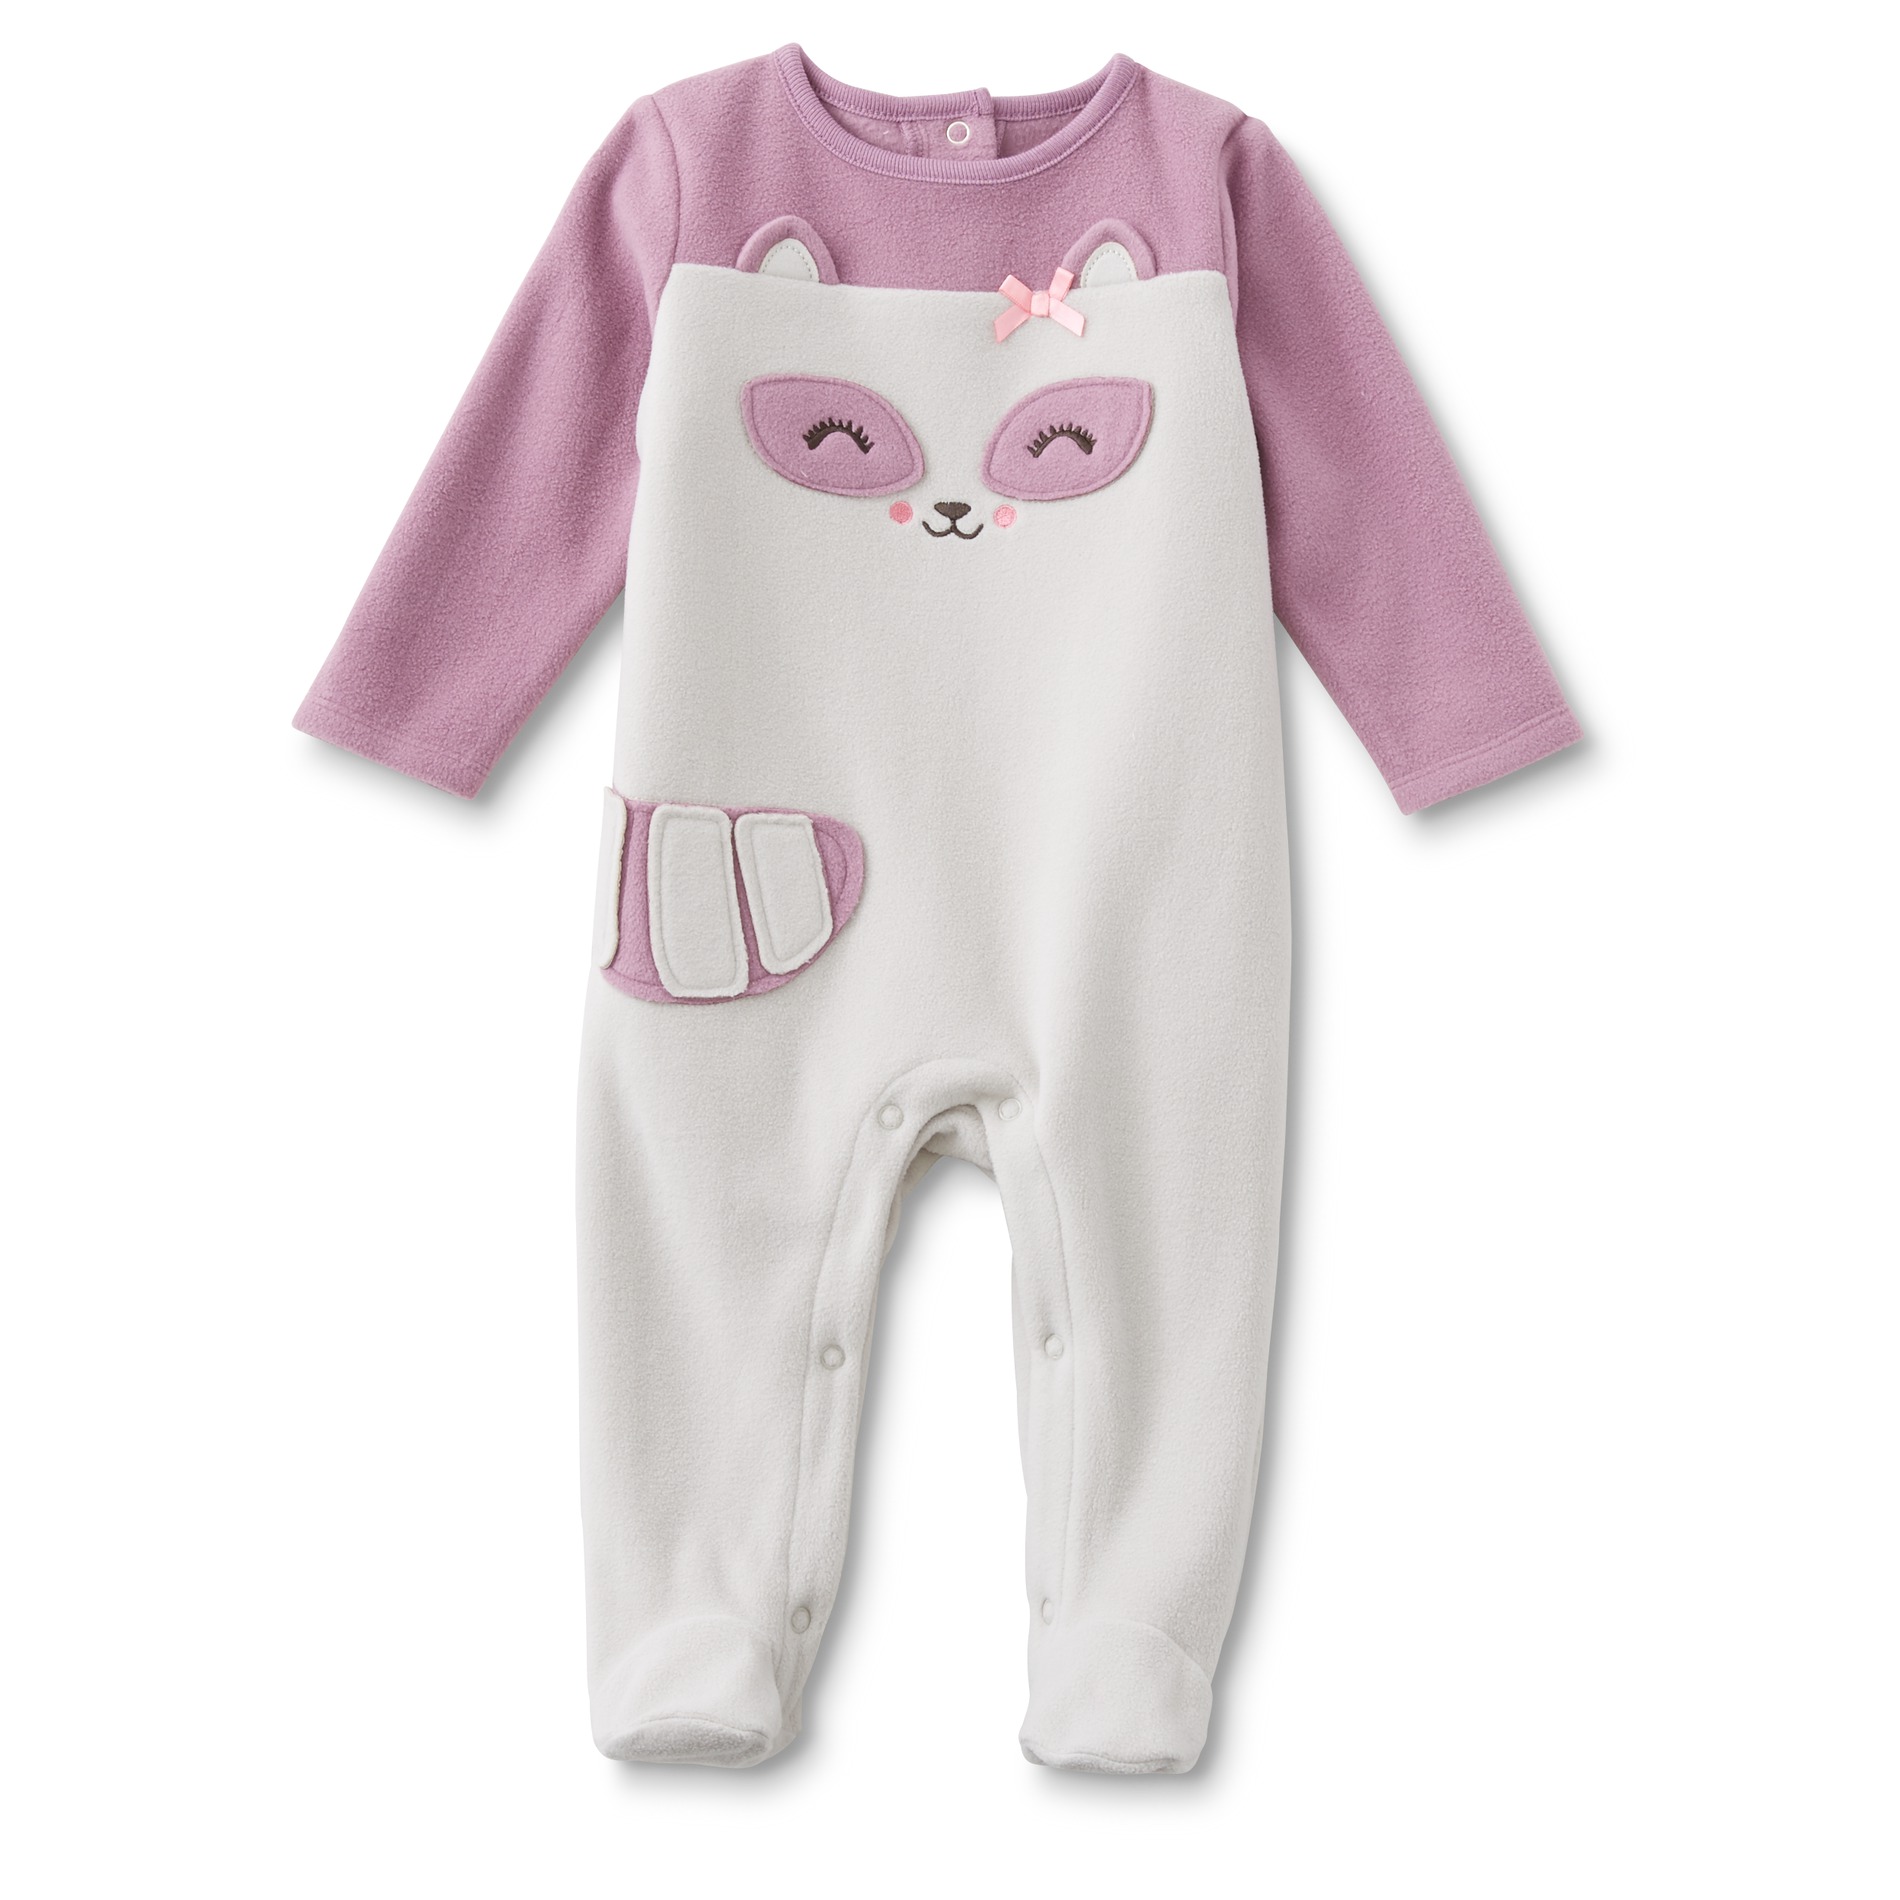 Little Wonders Newborn Girl's Footed Sleeper Pajamas - Raccoon